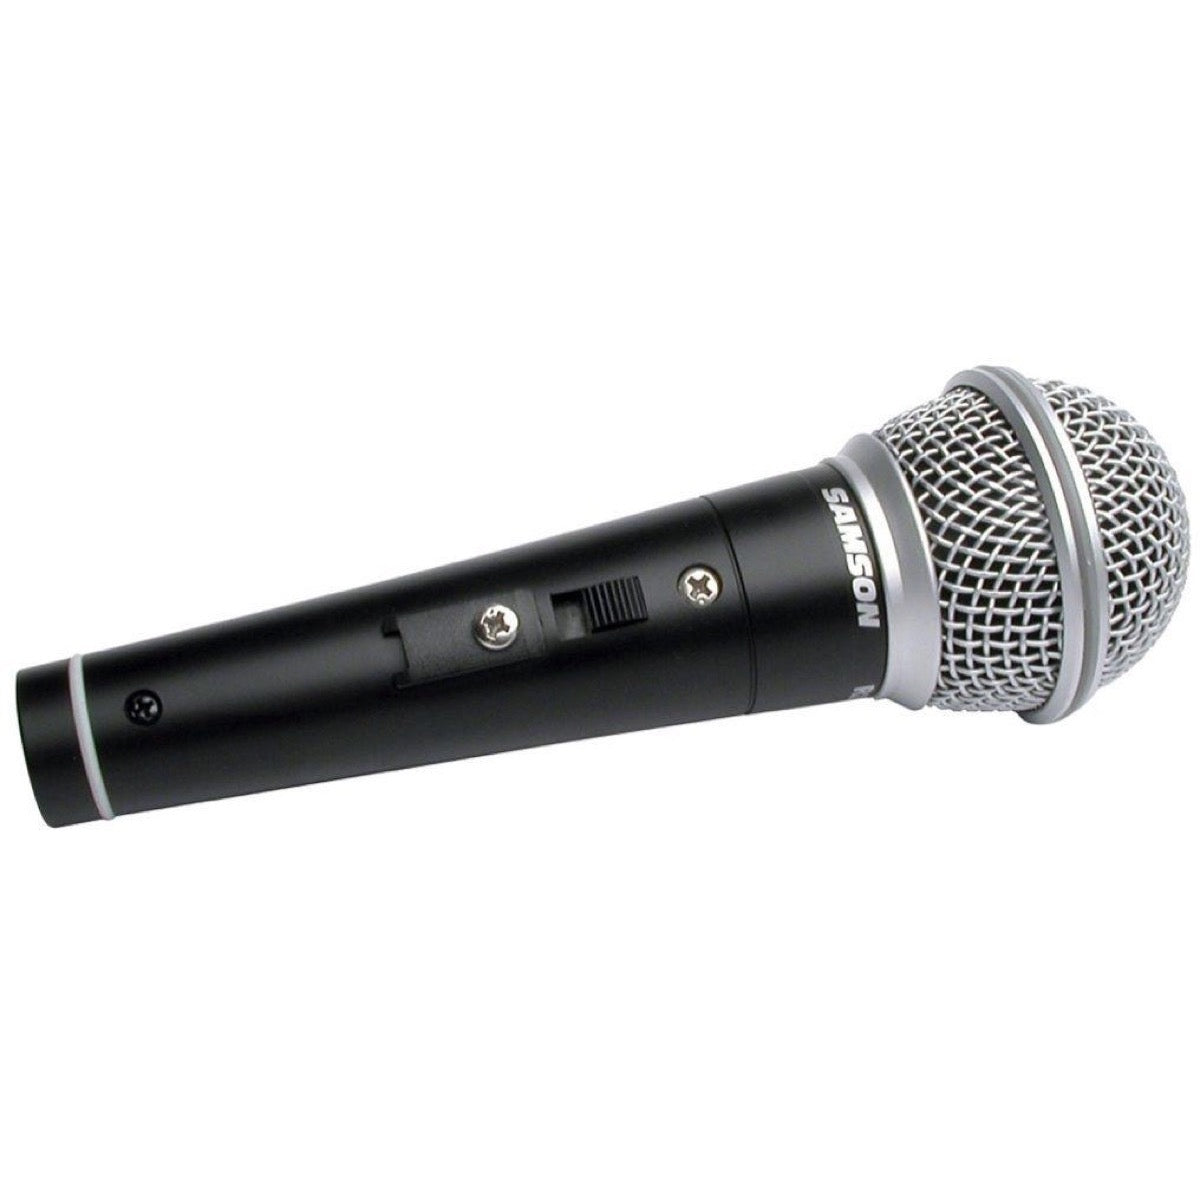 Samson R21S Dynamic Cardioid Handheld Microphone